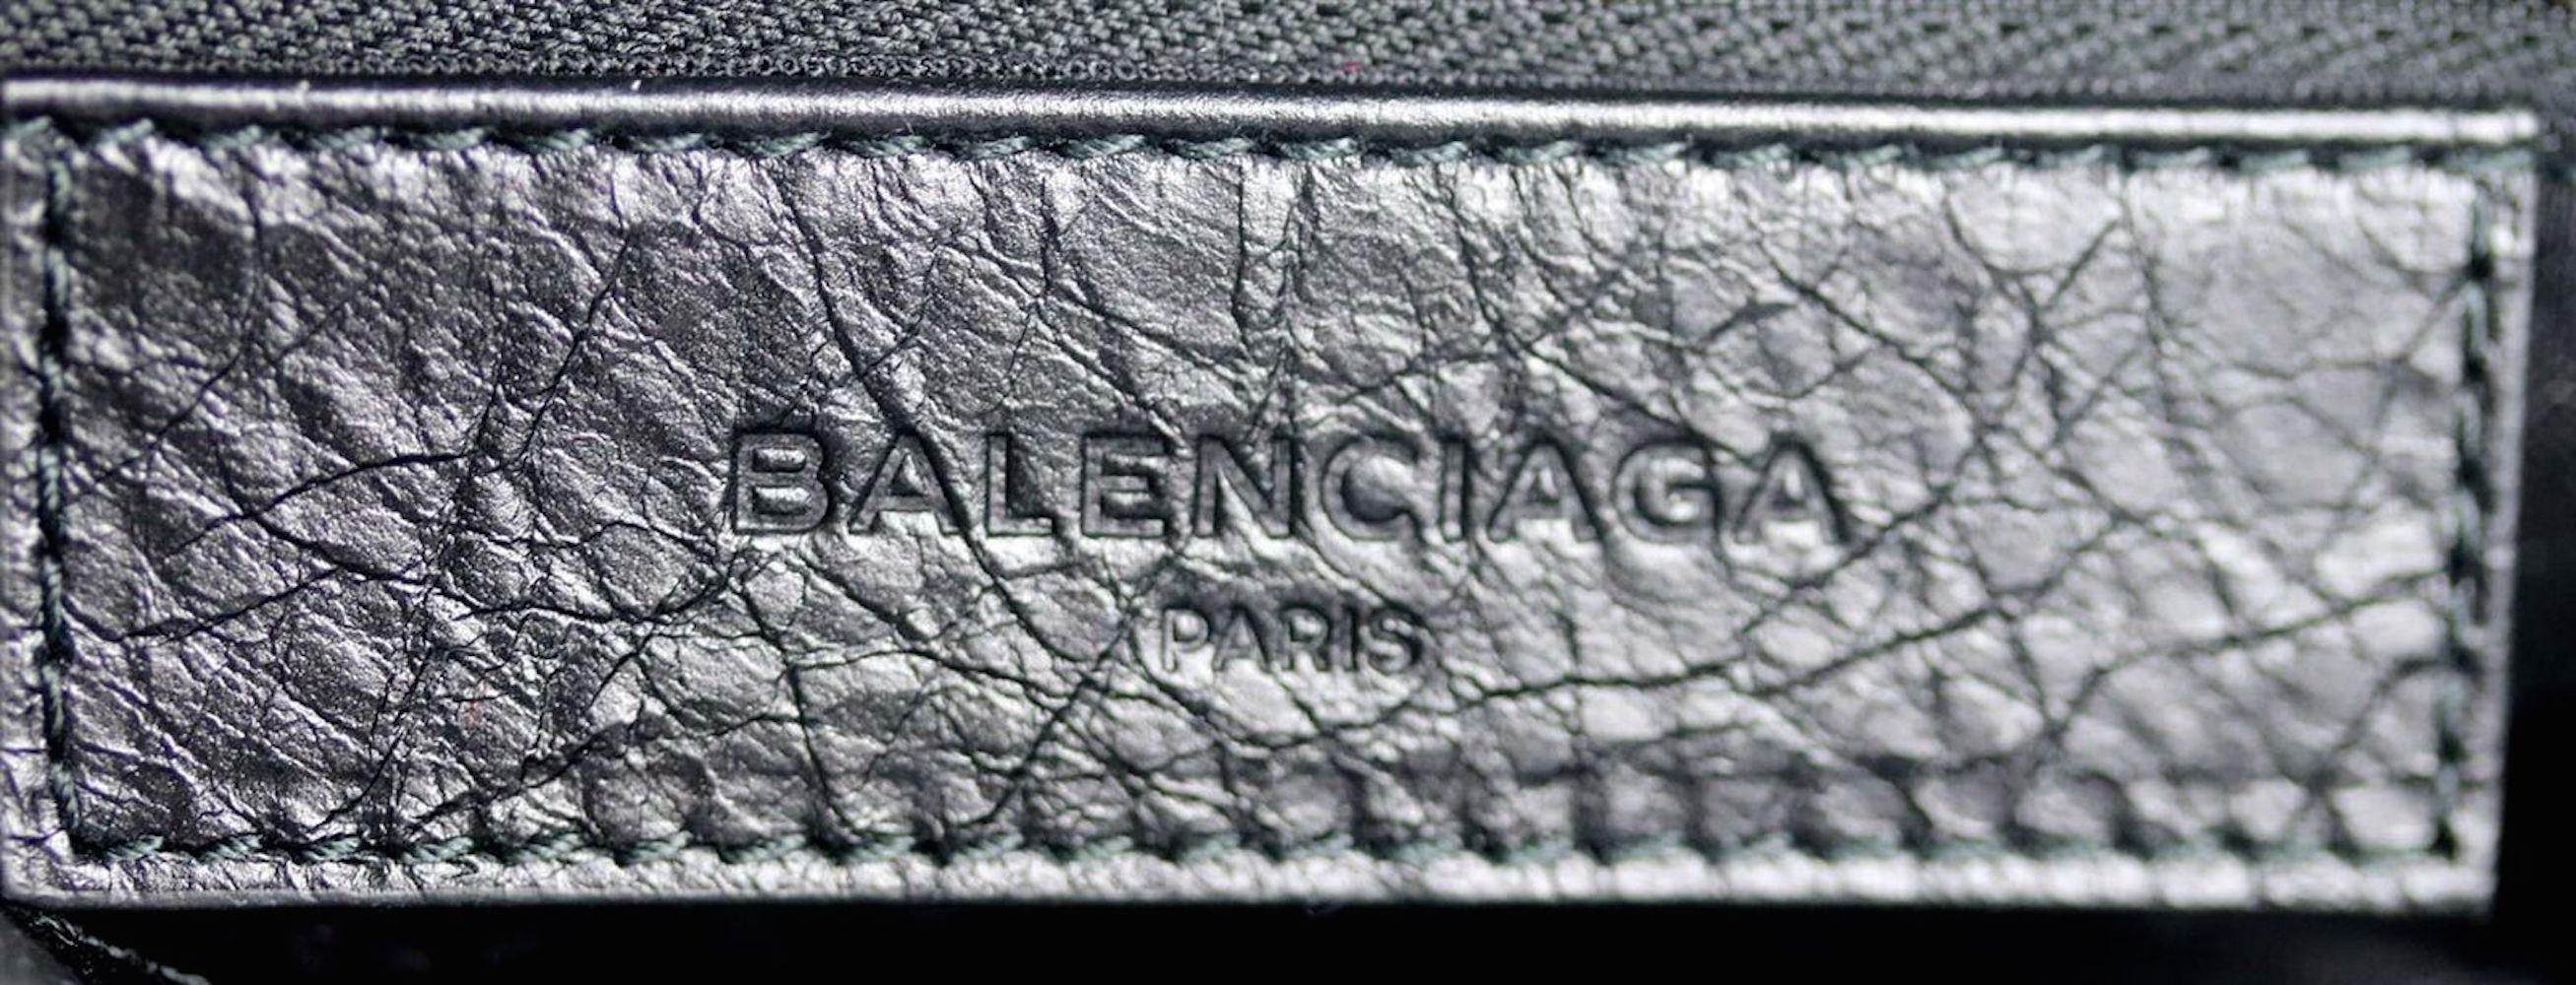 Balenciaga Classic City Graffiti Printed Textured Leather Tote Bag 2